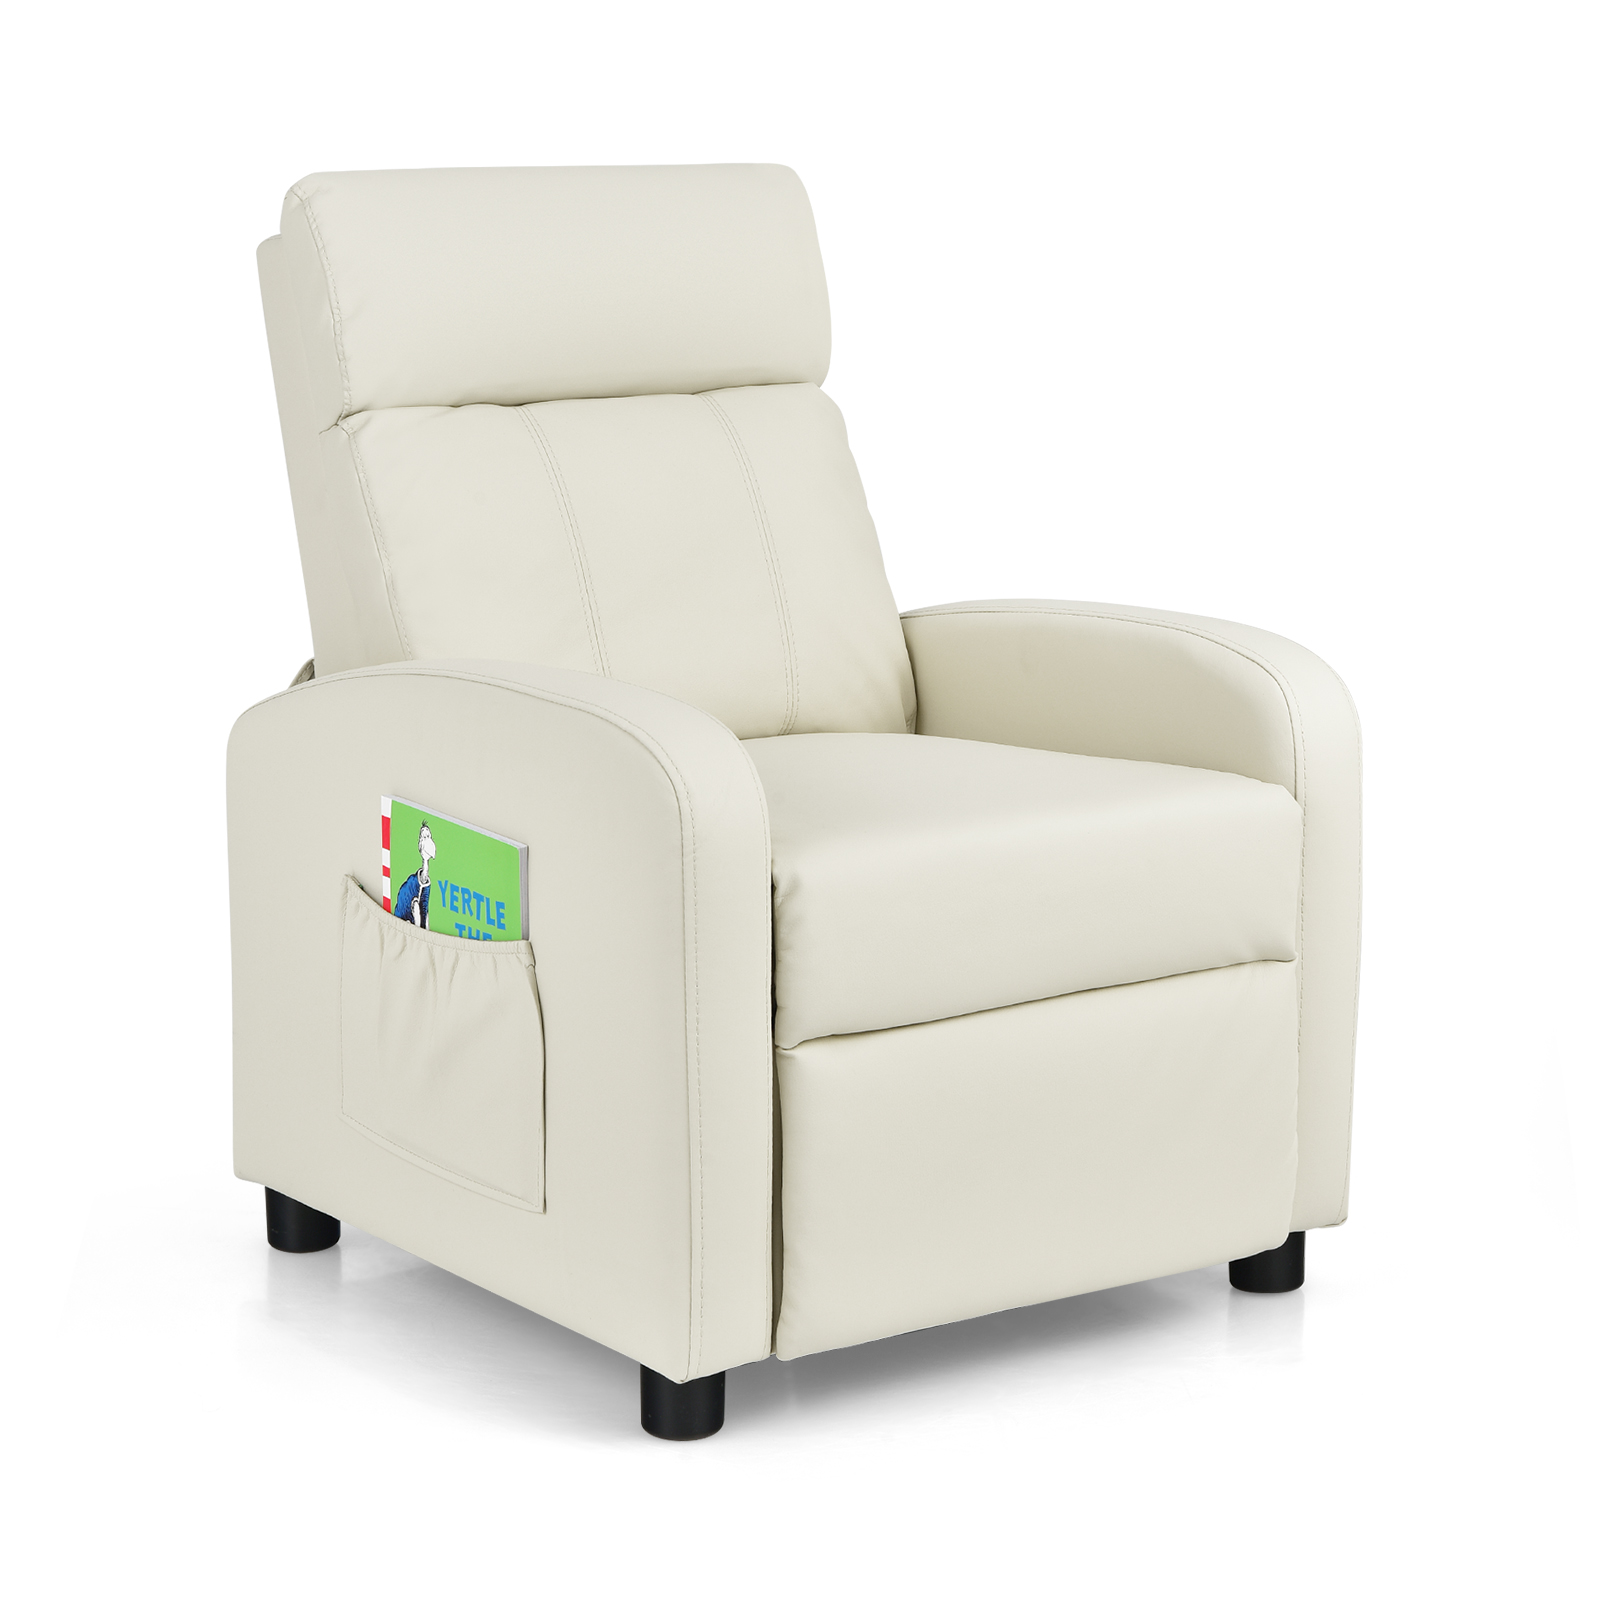 Kids Recliner Chair Adjustable Leather Sofa with Footrest Side Pocket-Beige